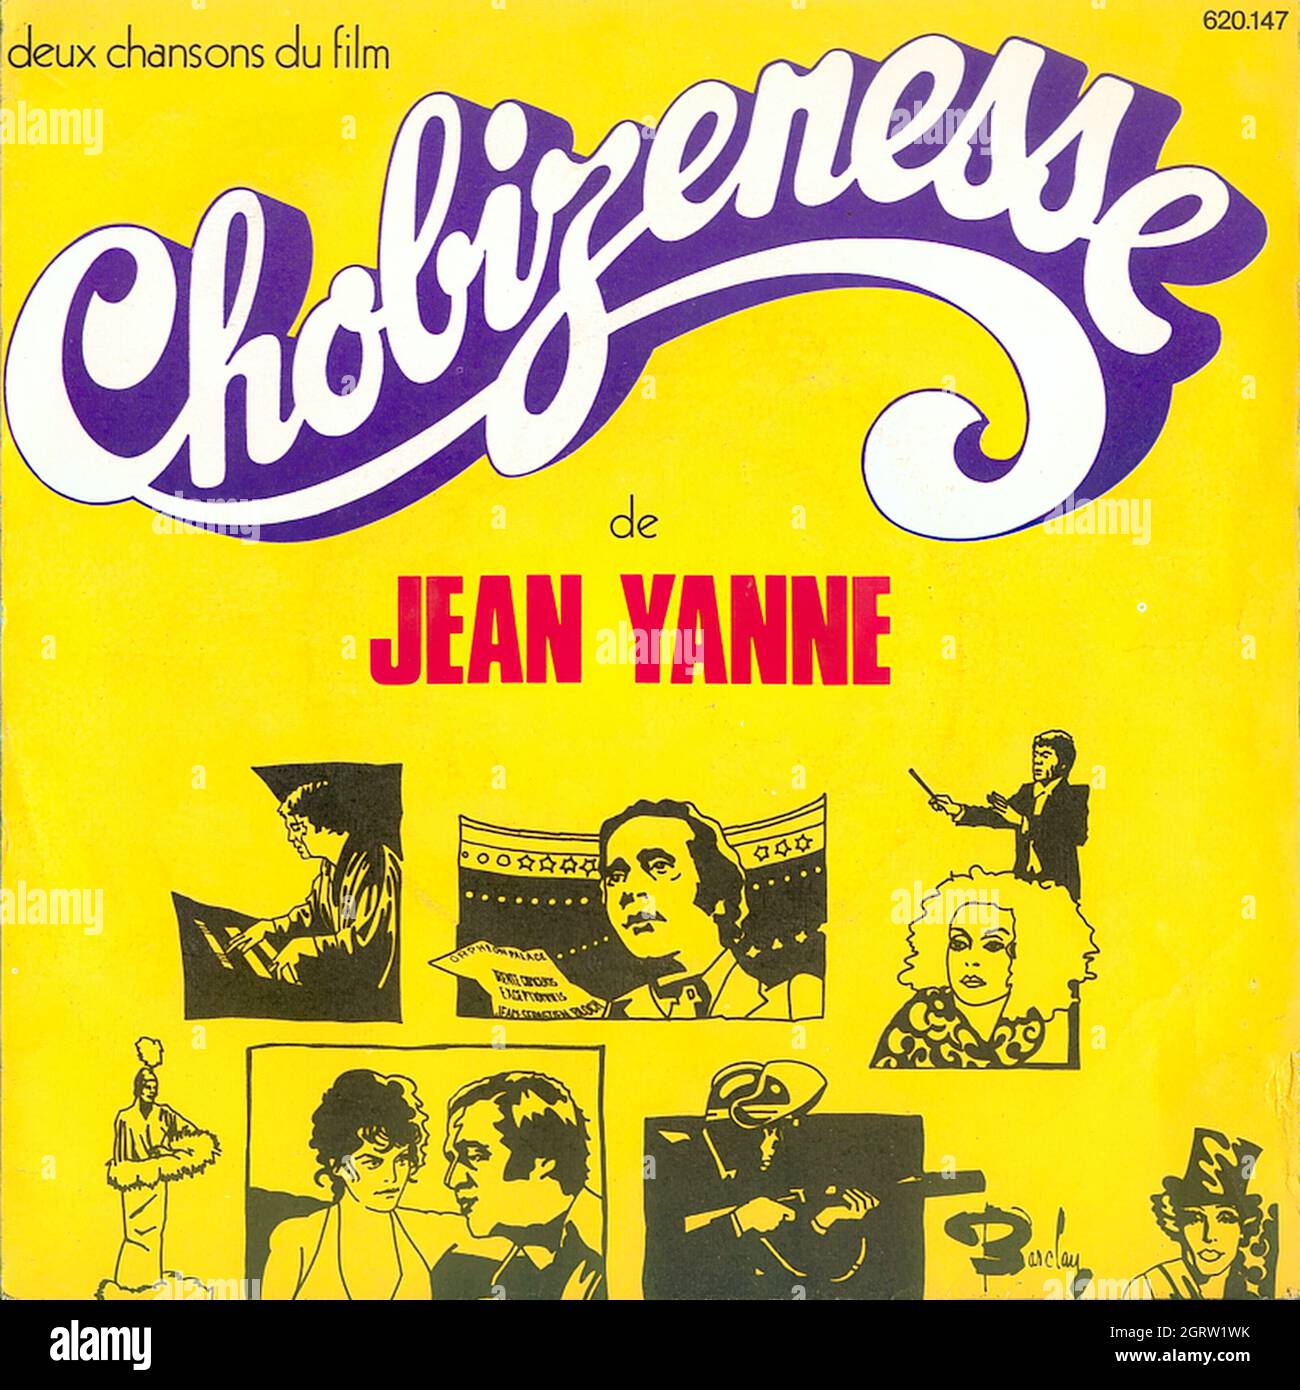 Jean Yanne - Chobizenesse o.s.t. - Vintage Vinyl Record Cover Stock Photo